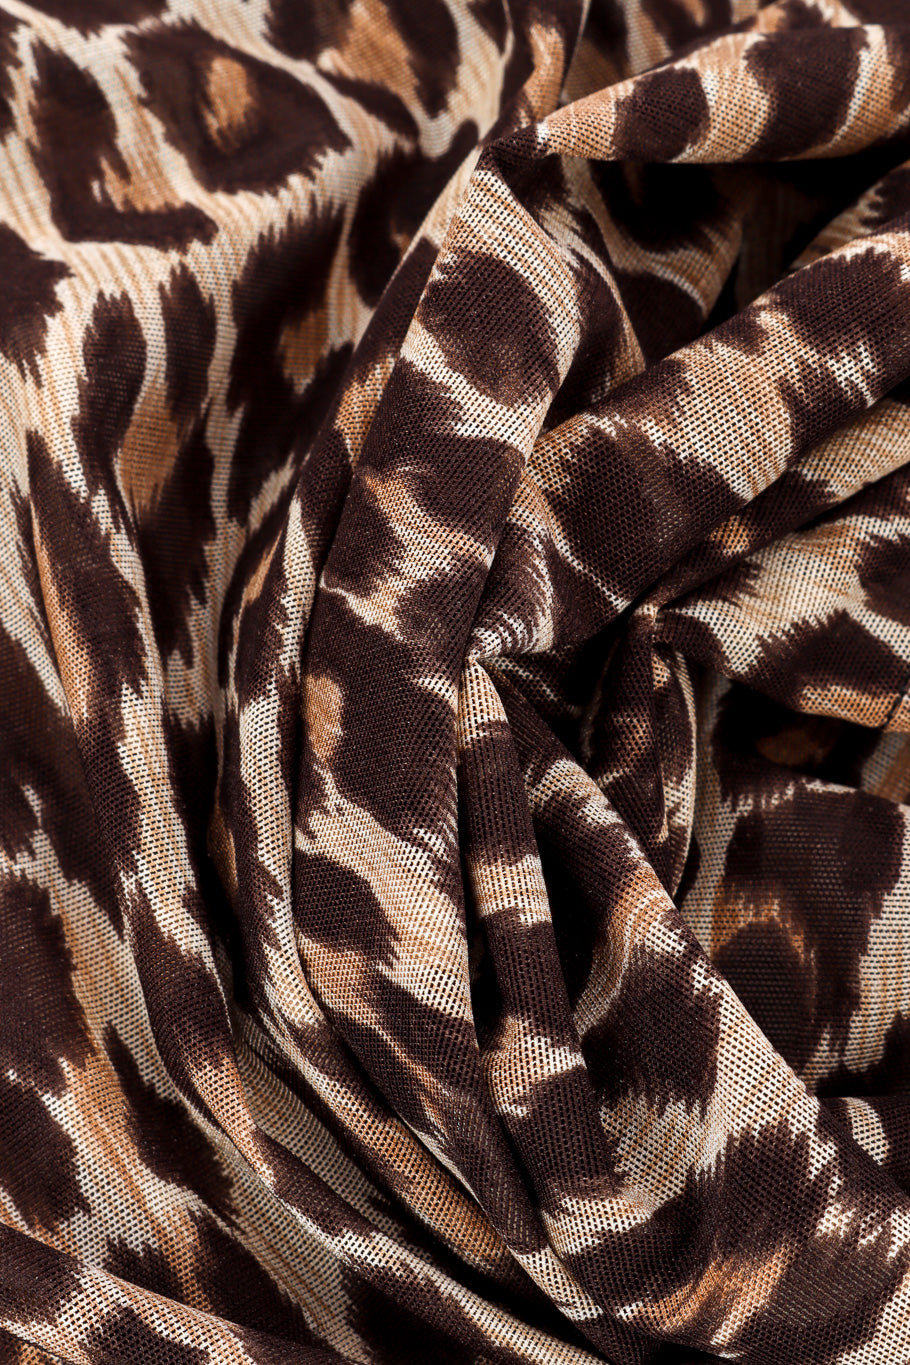 Leopard Mesh Top by Dolce & Gabbana fabric close @recessla